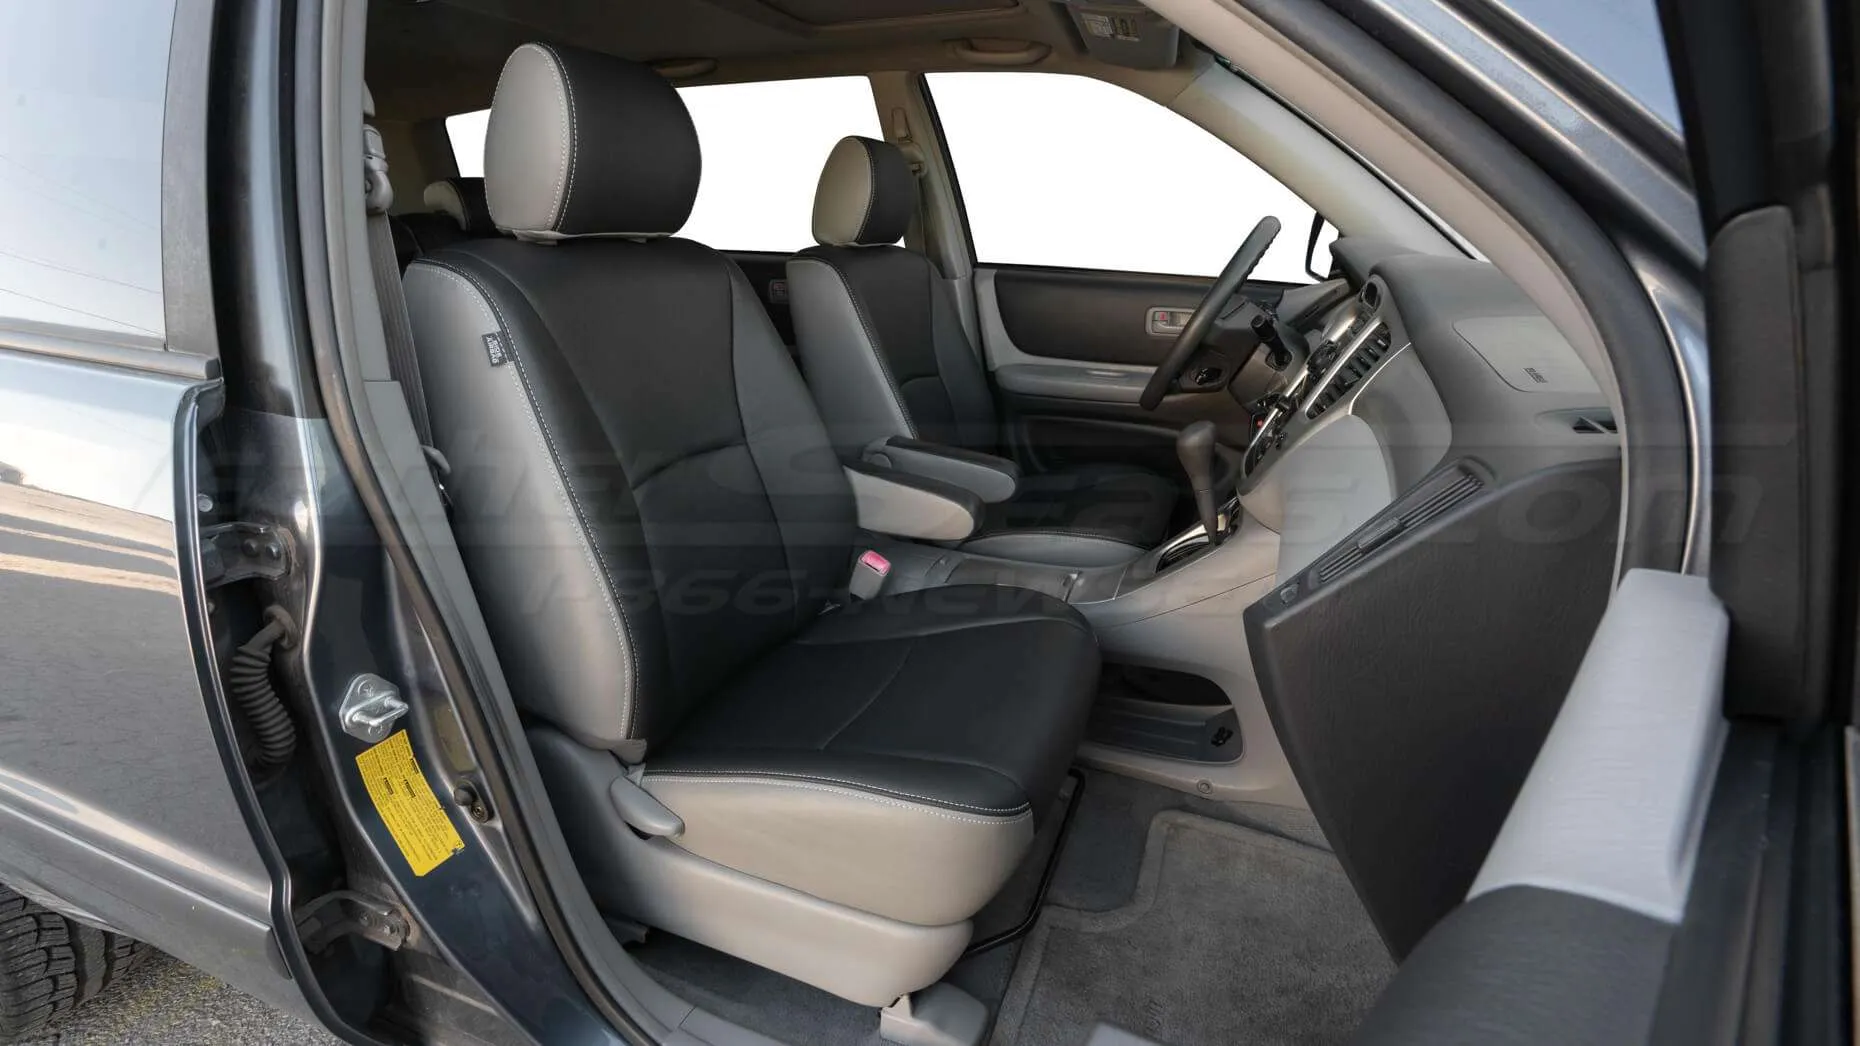 Toyota Highlander with Installed Leather Seats - Ash & Dark Graphite - Front passenger seat